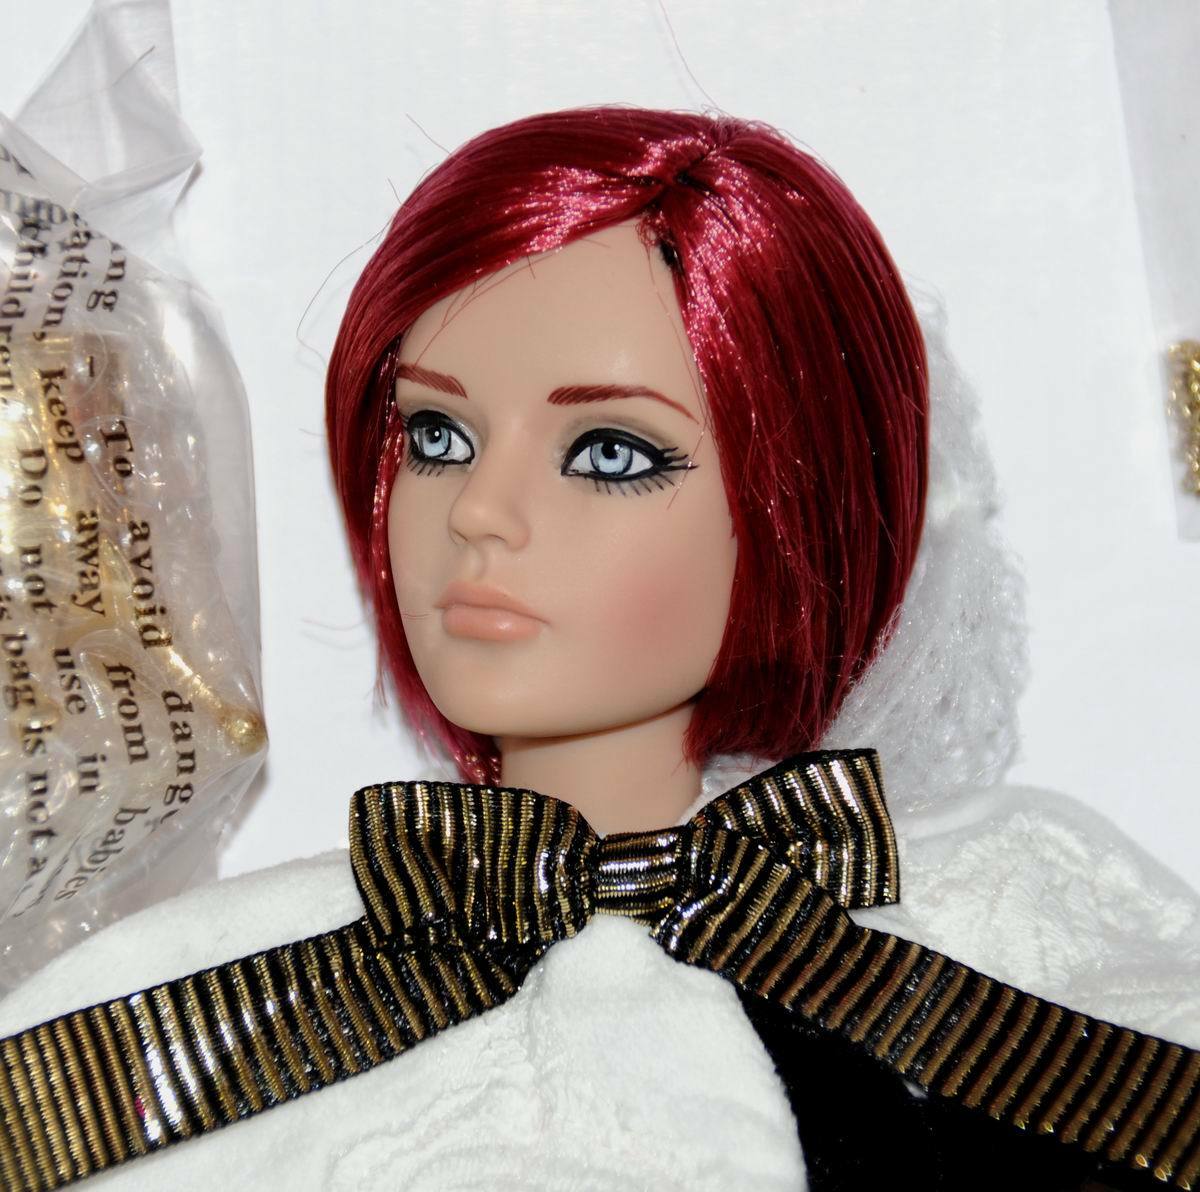 Stacked Deck Heart Doll Nrfb 16" Tonner Halloween Convention 2015 Ltd 150 Sydney